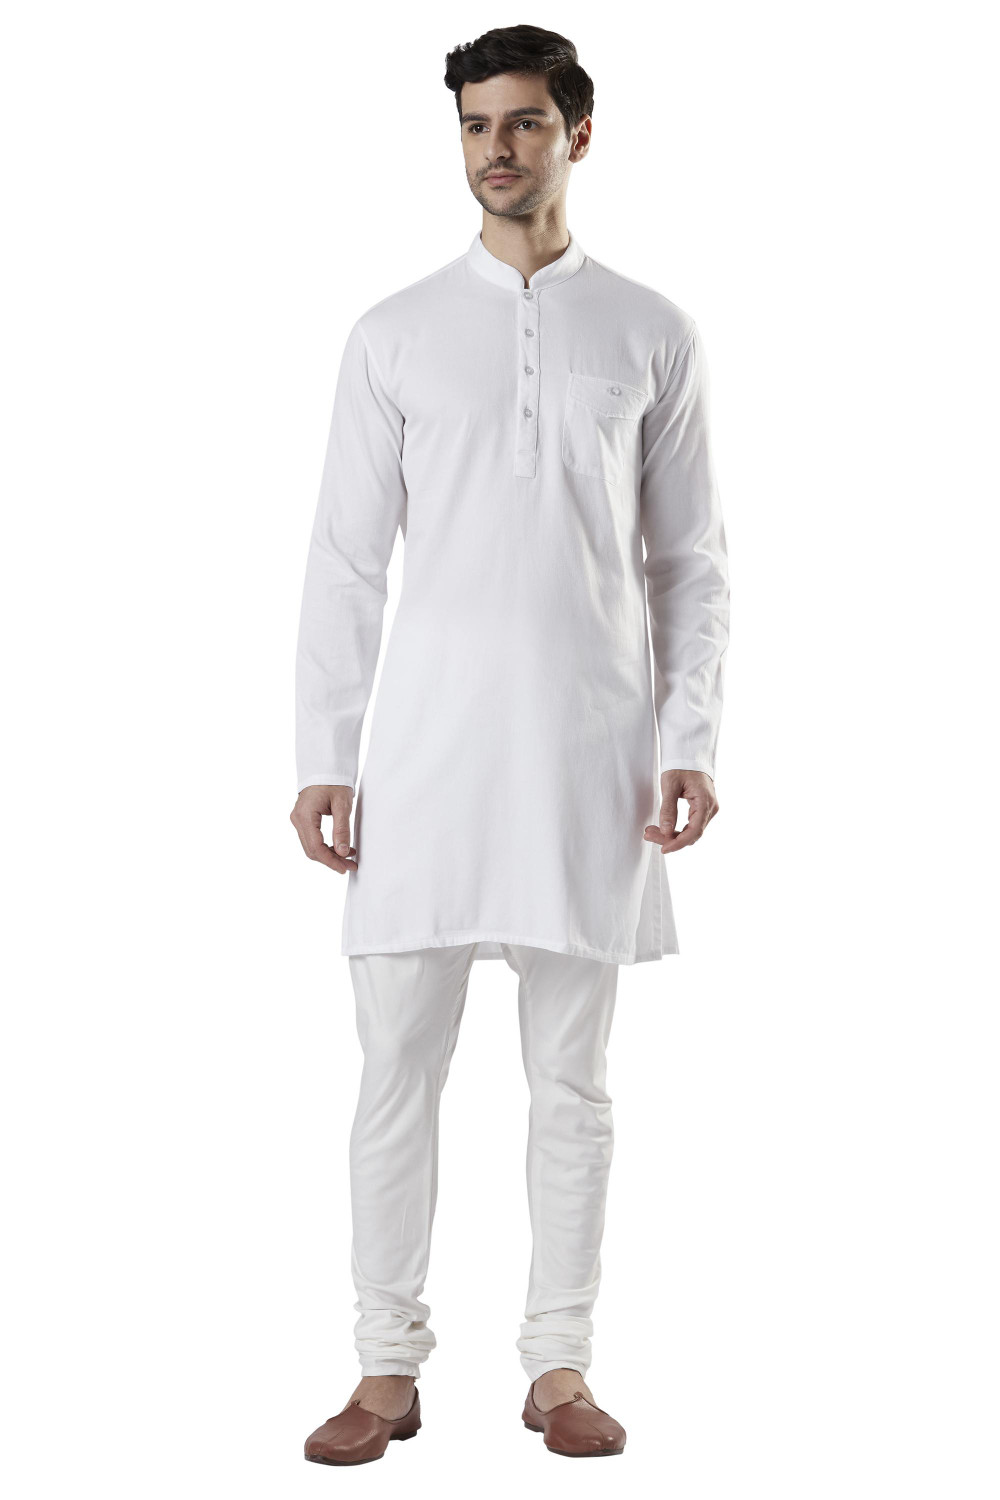 White Color Indian 100% Cotton Shirt Kurta Solid Top Men's